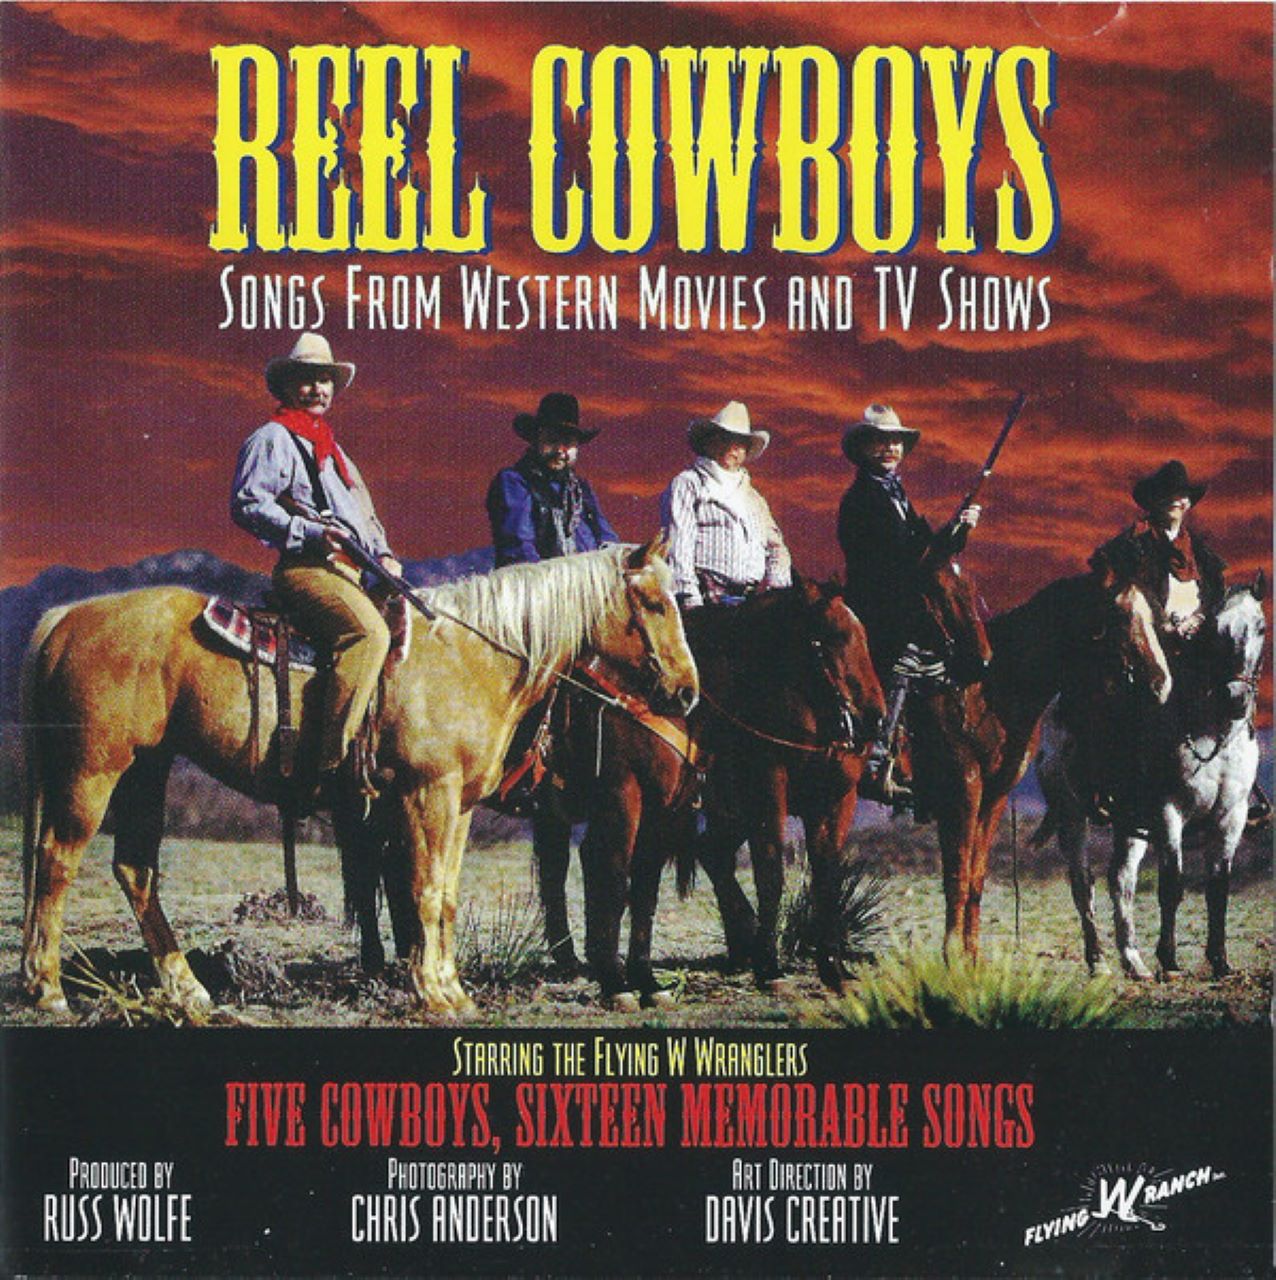 Flying W. Wranglers - Reel Cowboys cover album